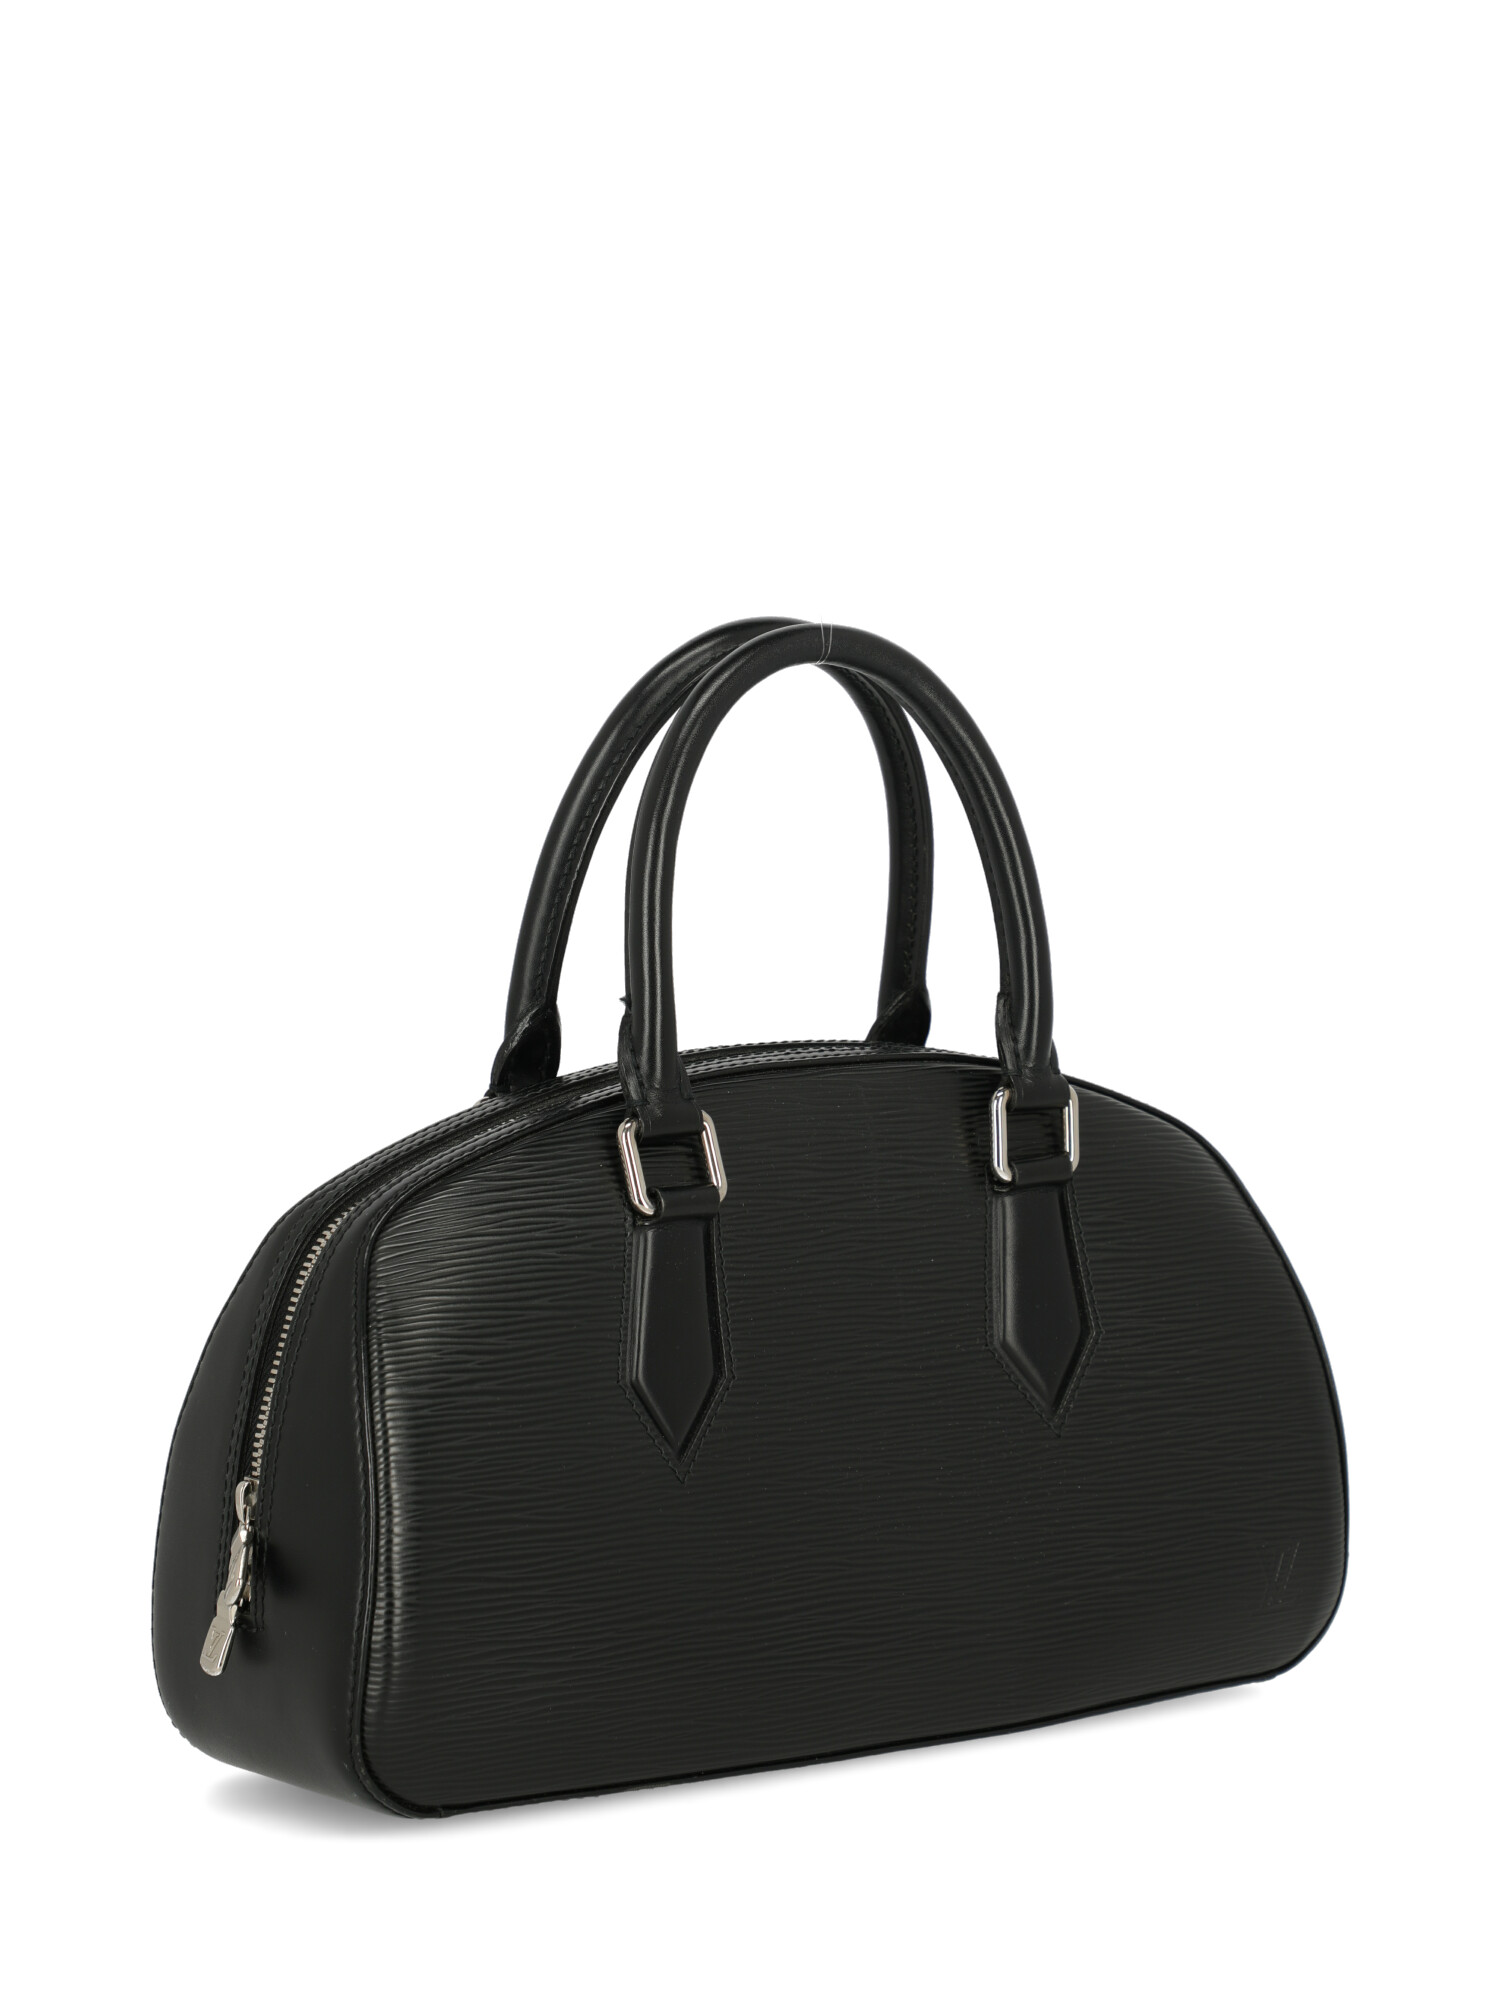 Louis Vuitton Special Price Women Handbags Black | eBay